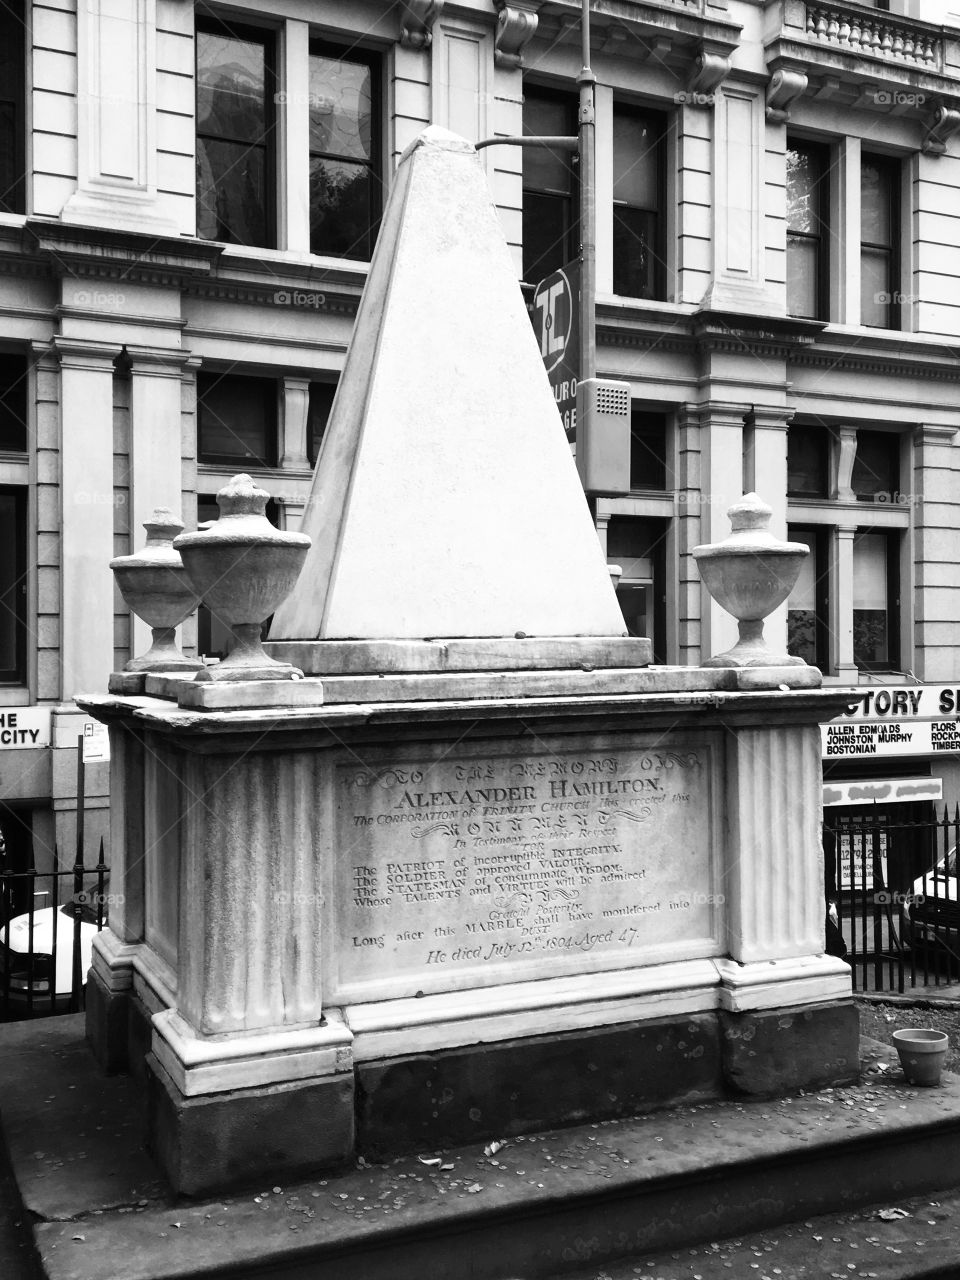 Alexander Hamilton headstone. New York City. 